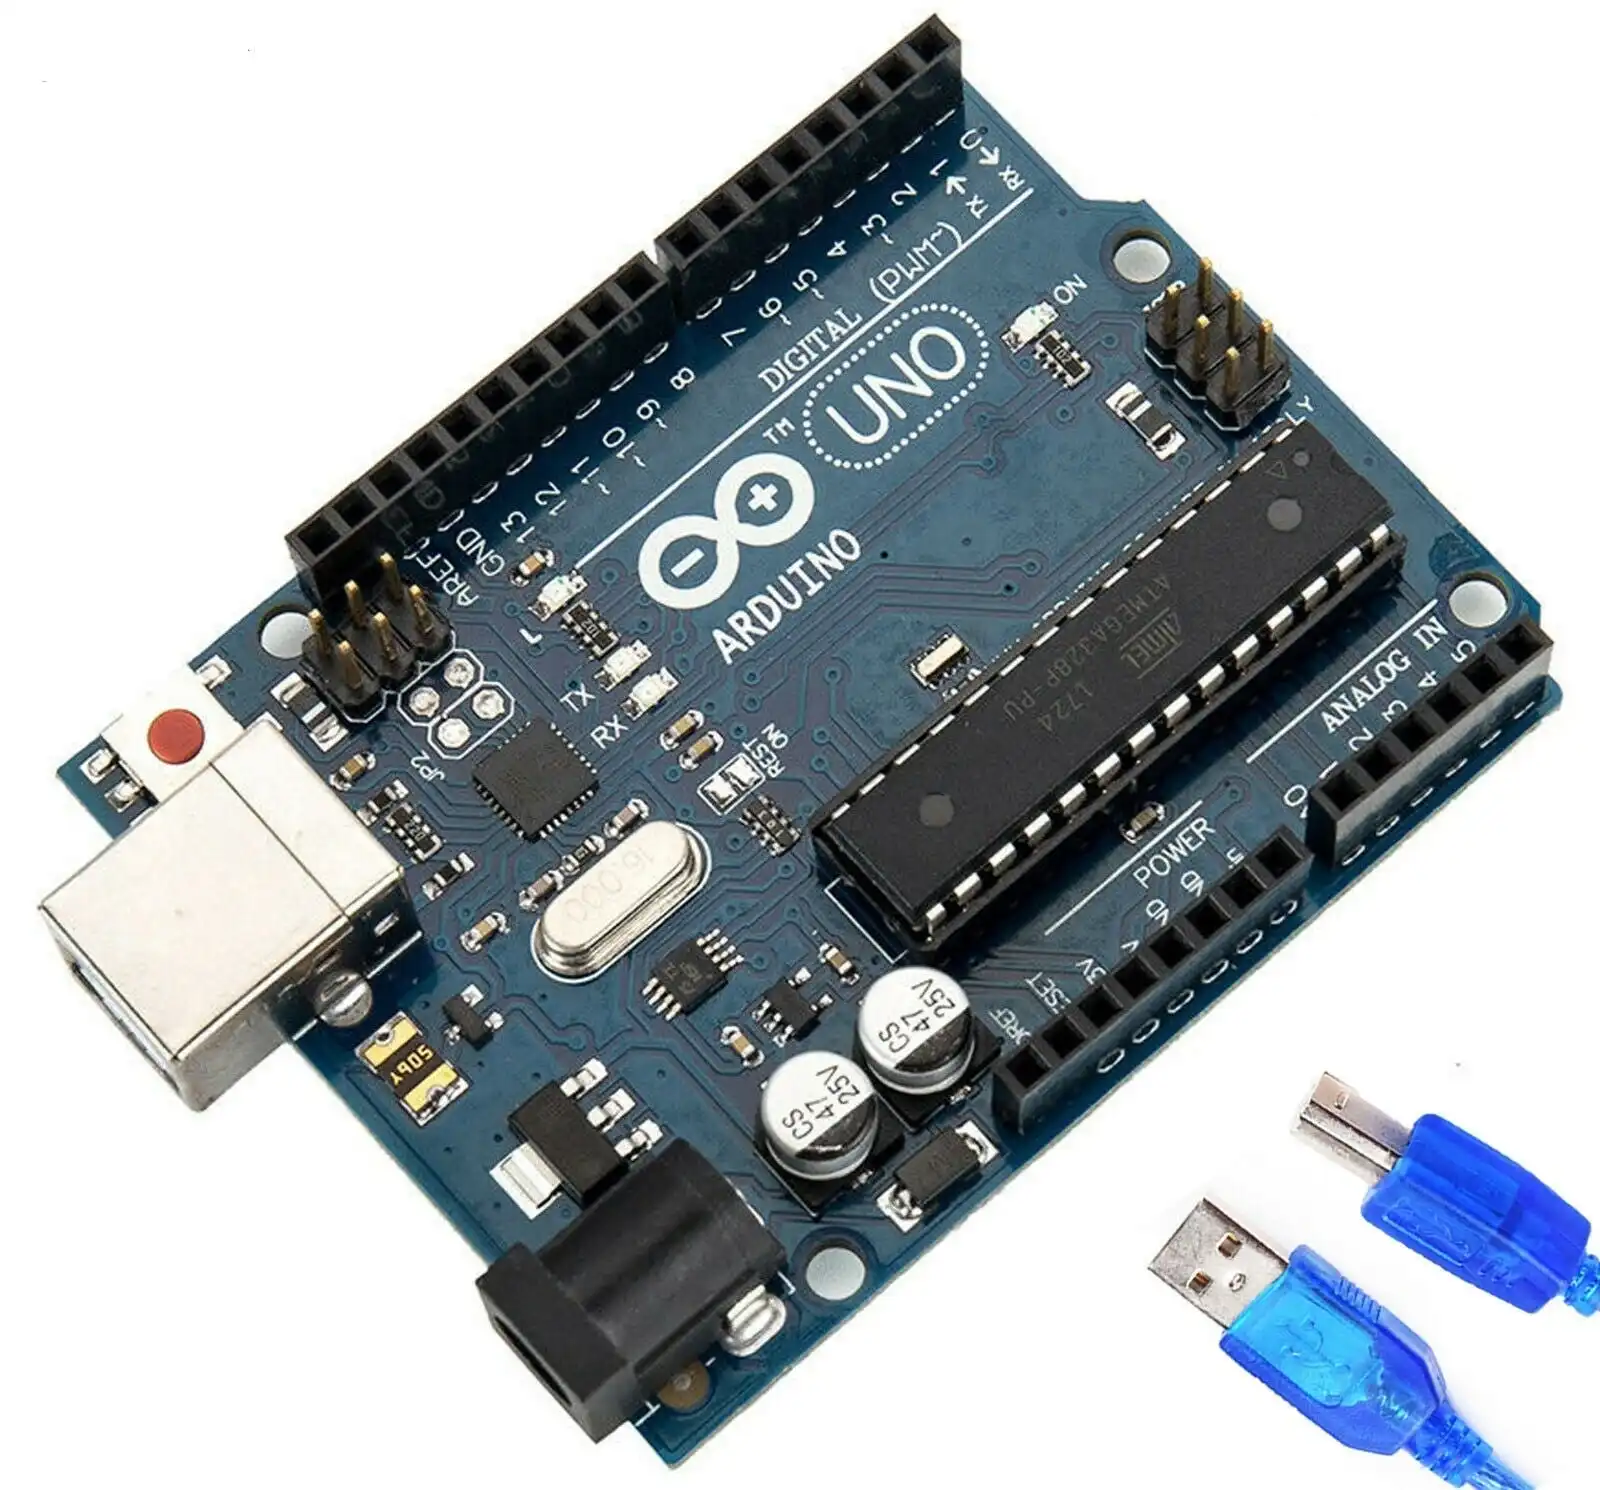 Arduino Compatible Generic Uno R3 Atmel ATmega328 Microcontroller Board With USB Cable